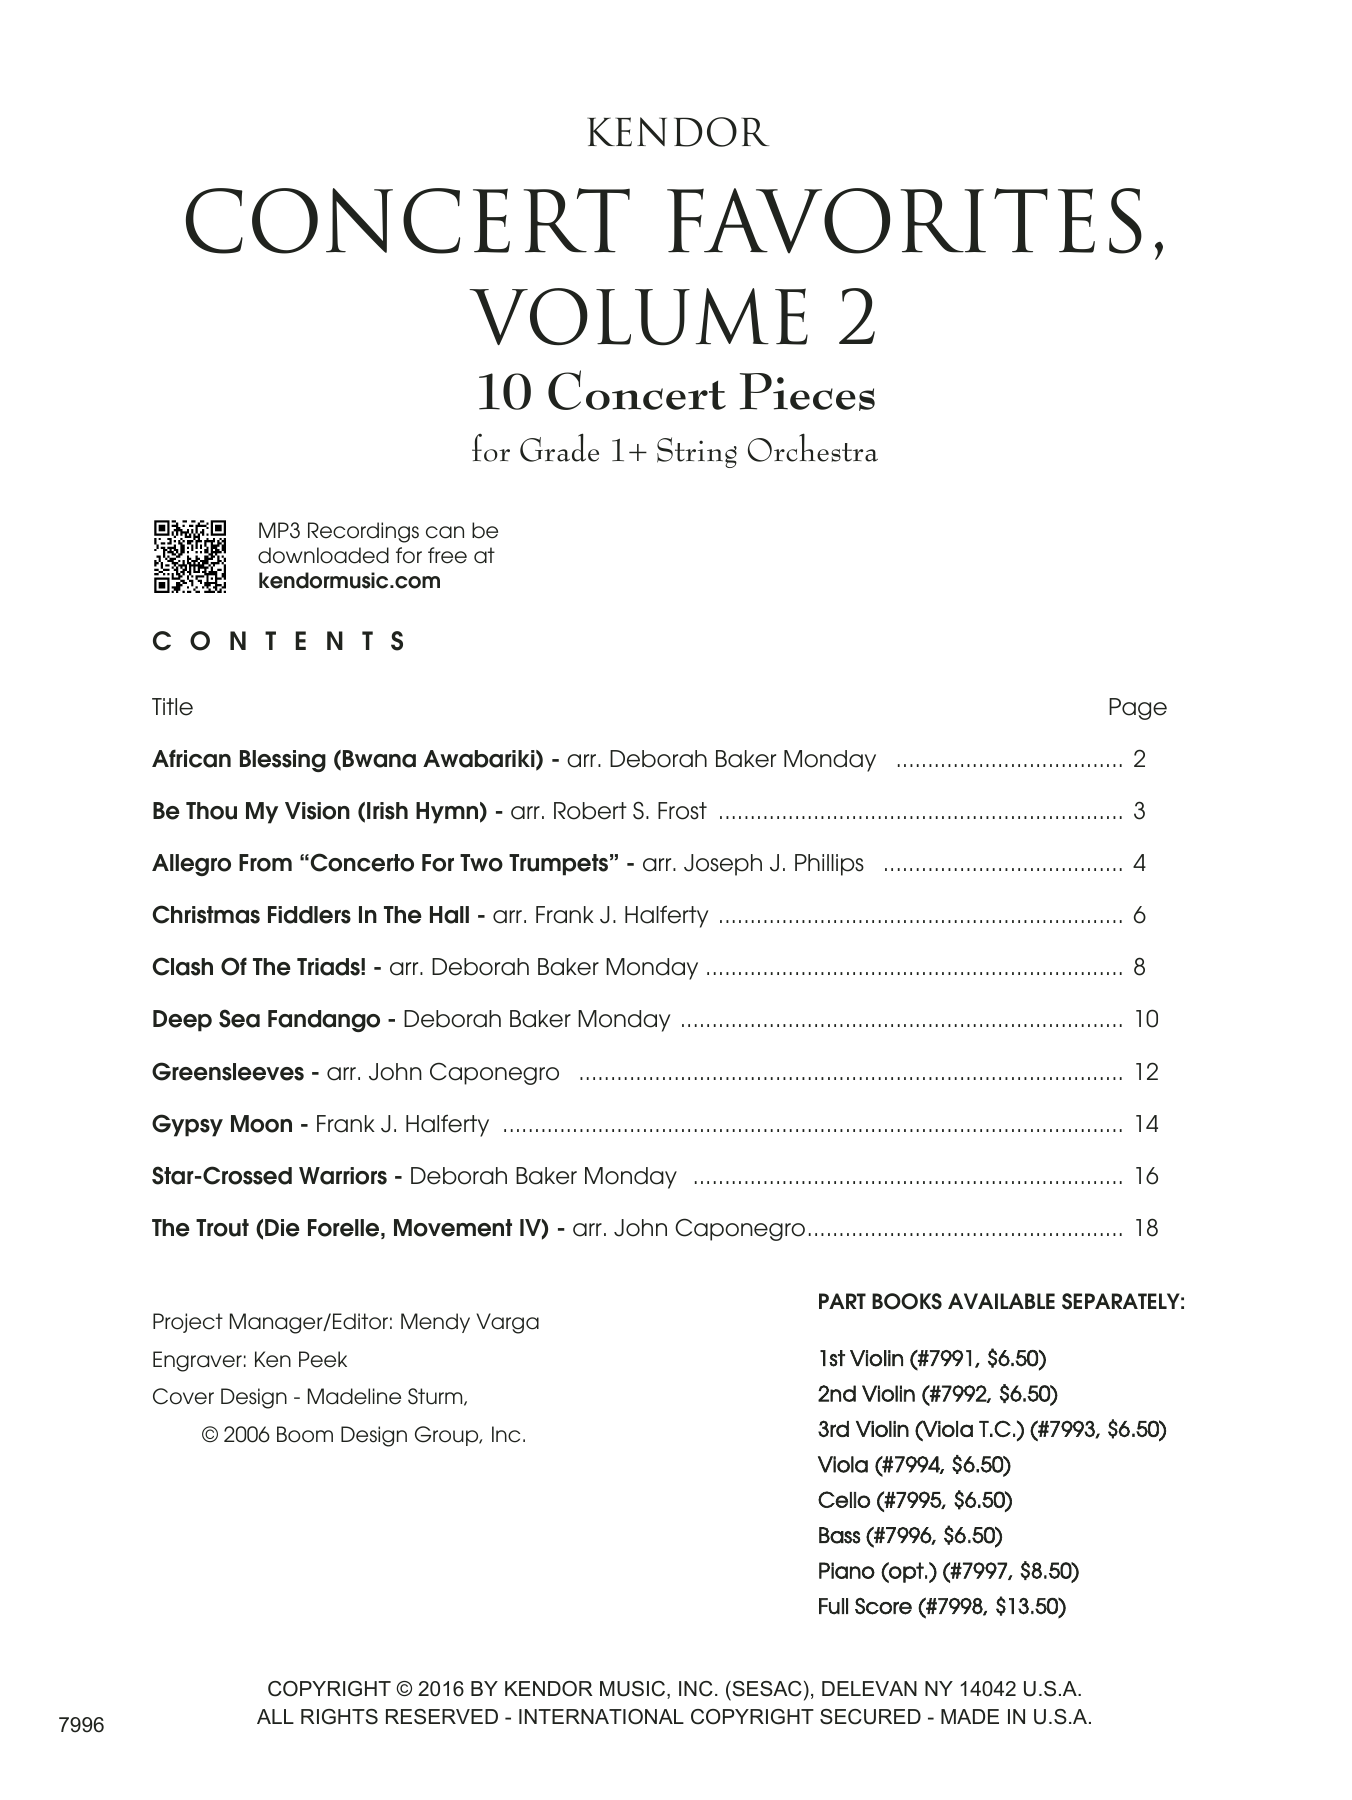 Download Various Kendor Concert Favorites, Volume 2 - Ba Sheet Music